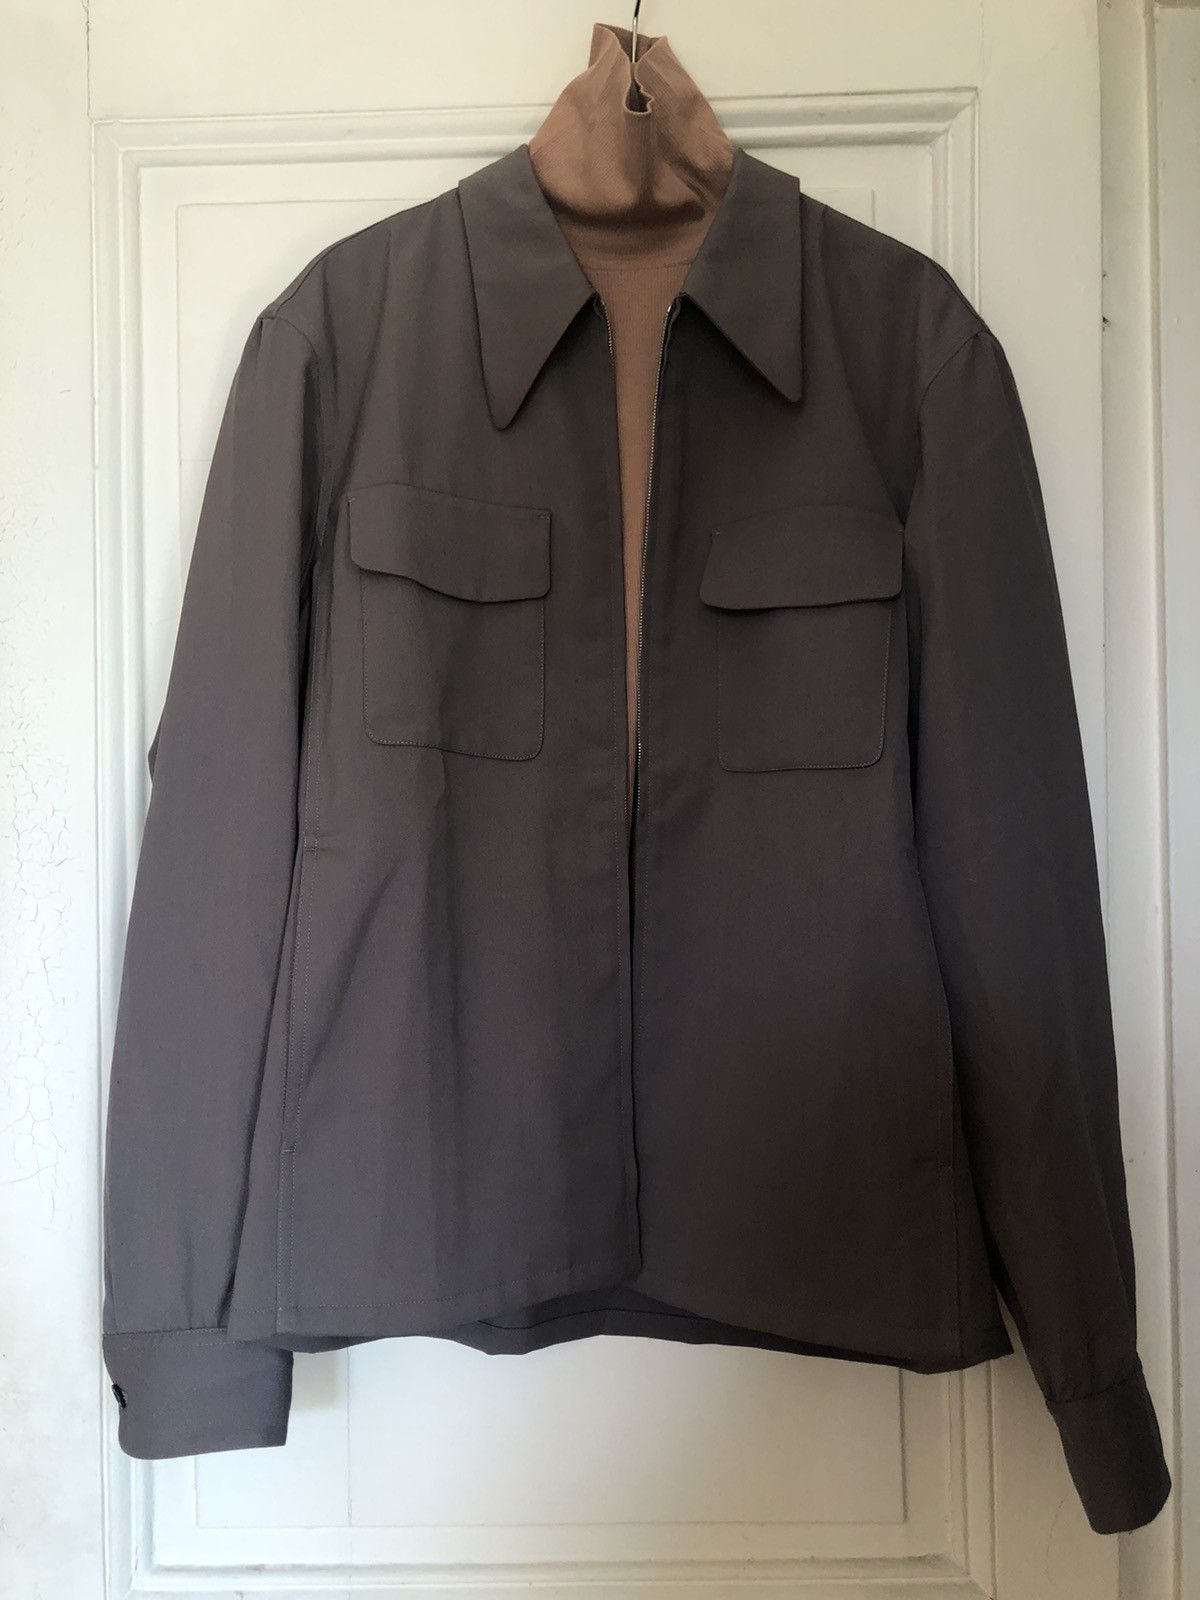 Lemaire Zipped light jacket Size US M / EU 48-50 / 2 - 2 Preview